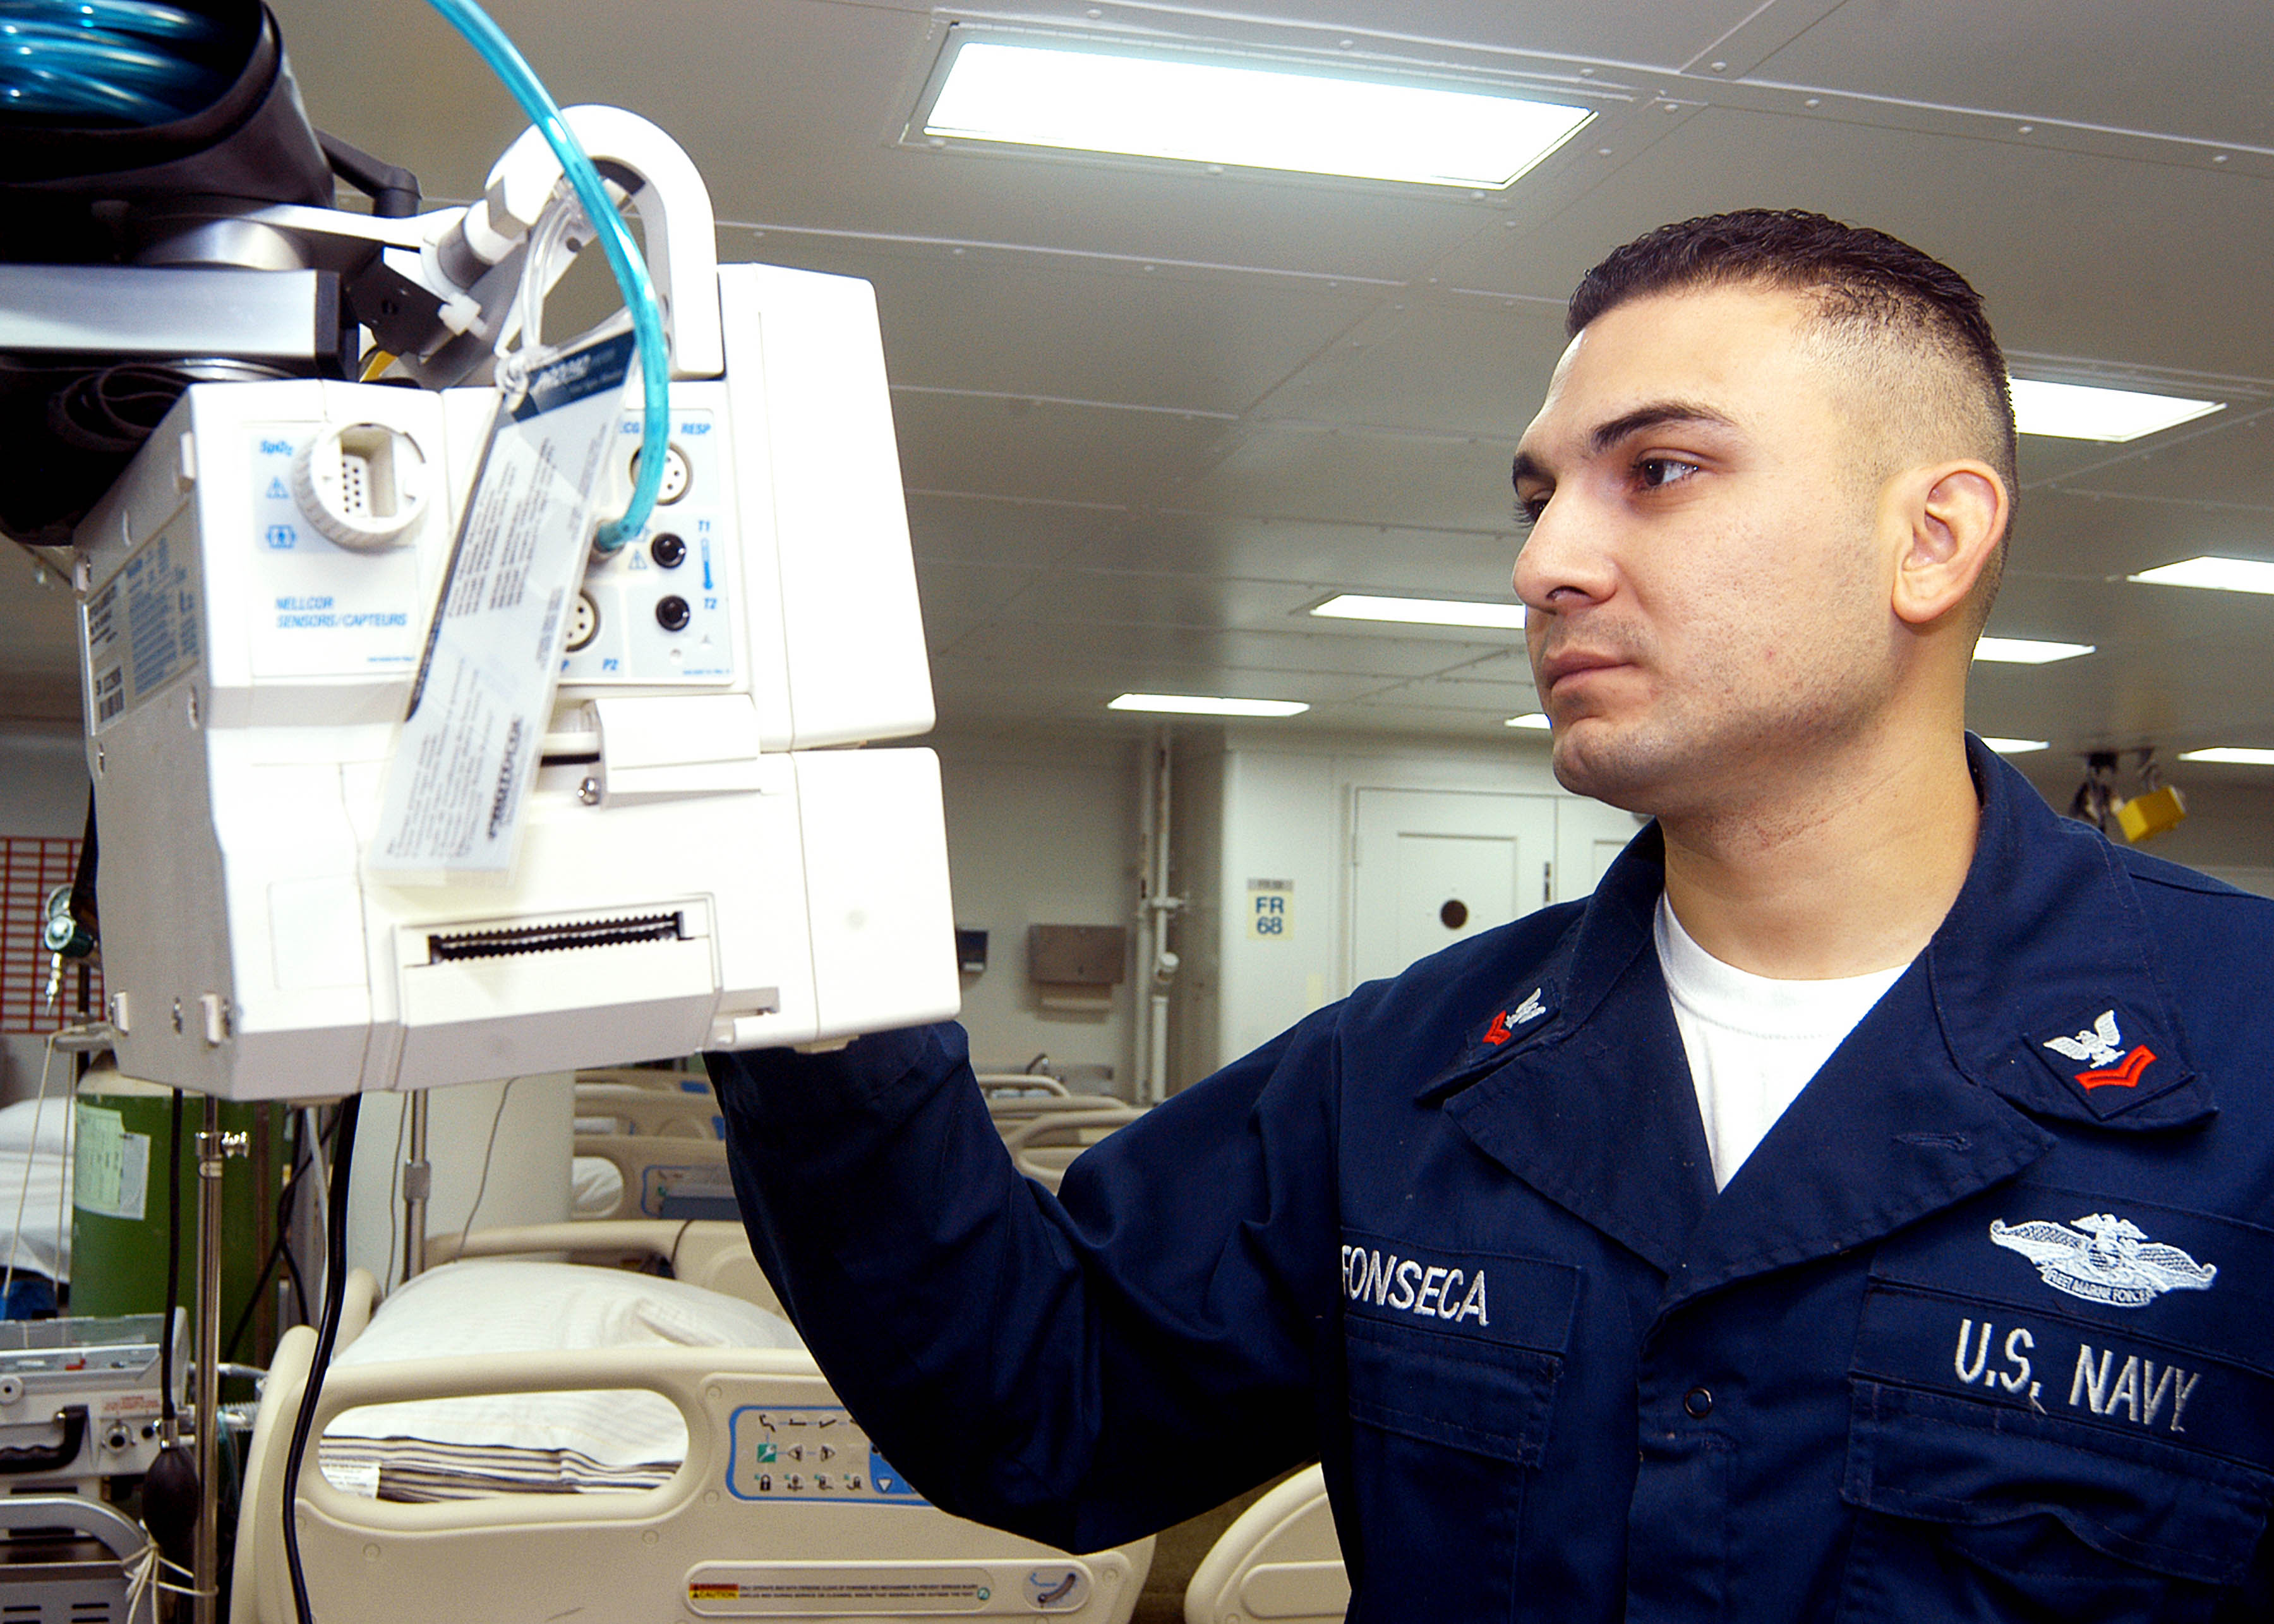 081125-D-9999F-001 - HM2 Luis Fonseca checks piece of medical equipment